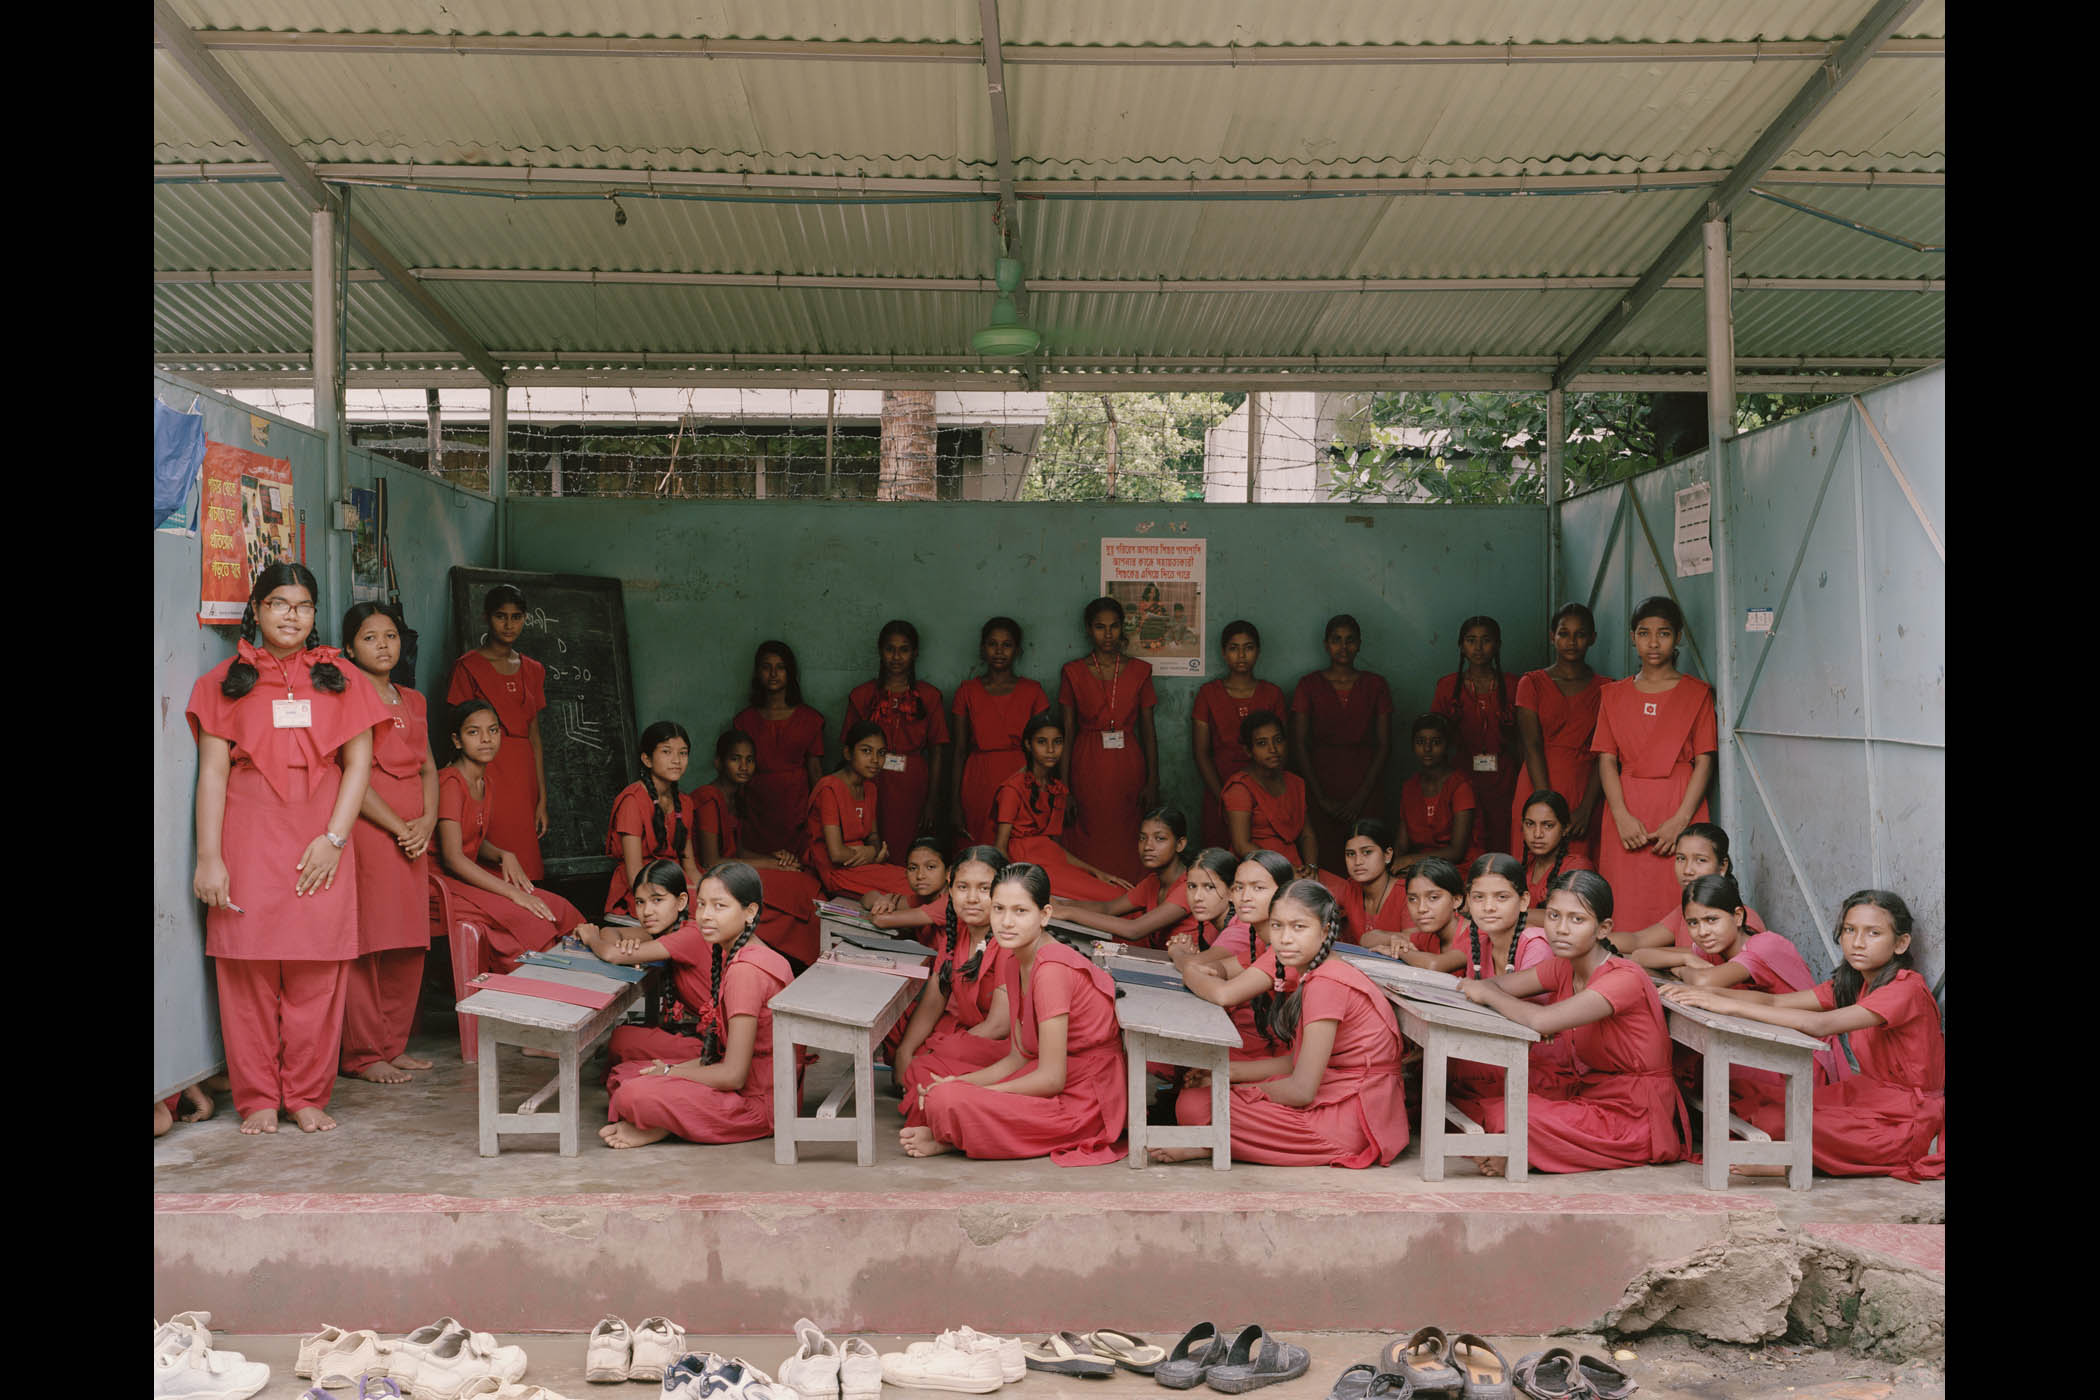 image: Surovi School, Dhanmondi, Dhaka, Bangladesh. Year 6, Bengali Exam. July 9, 2009.